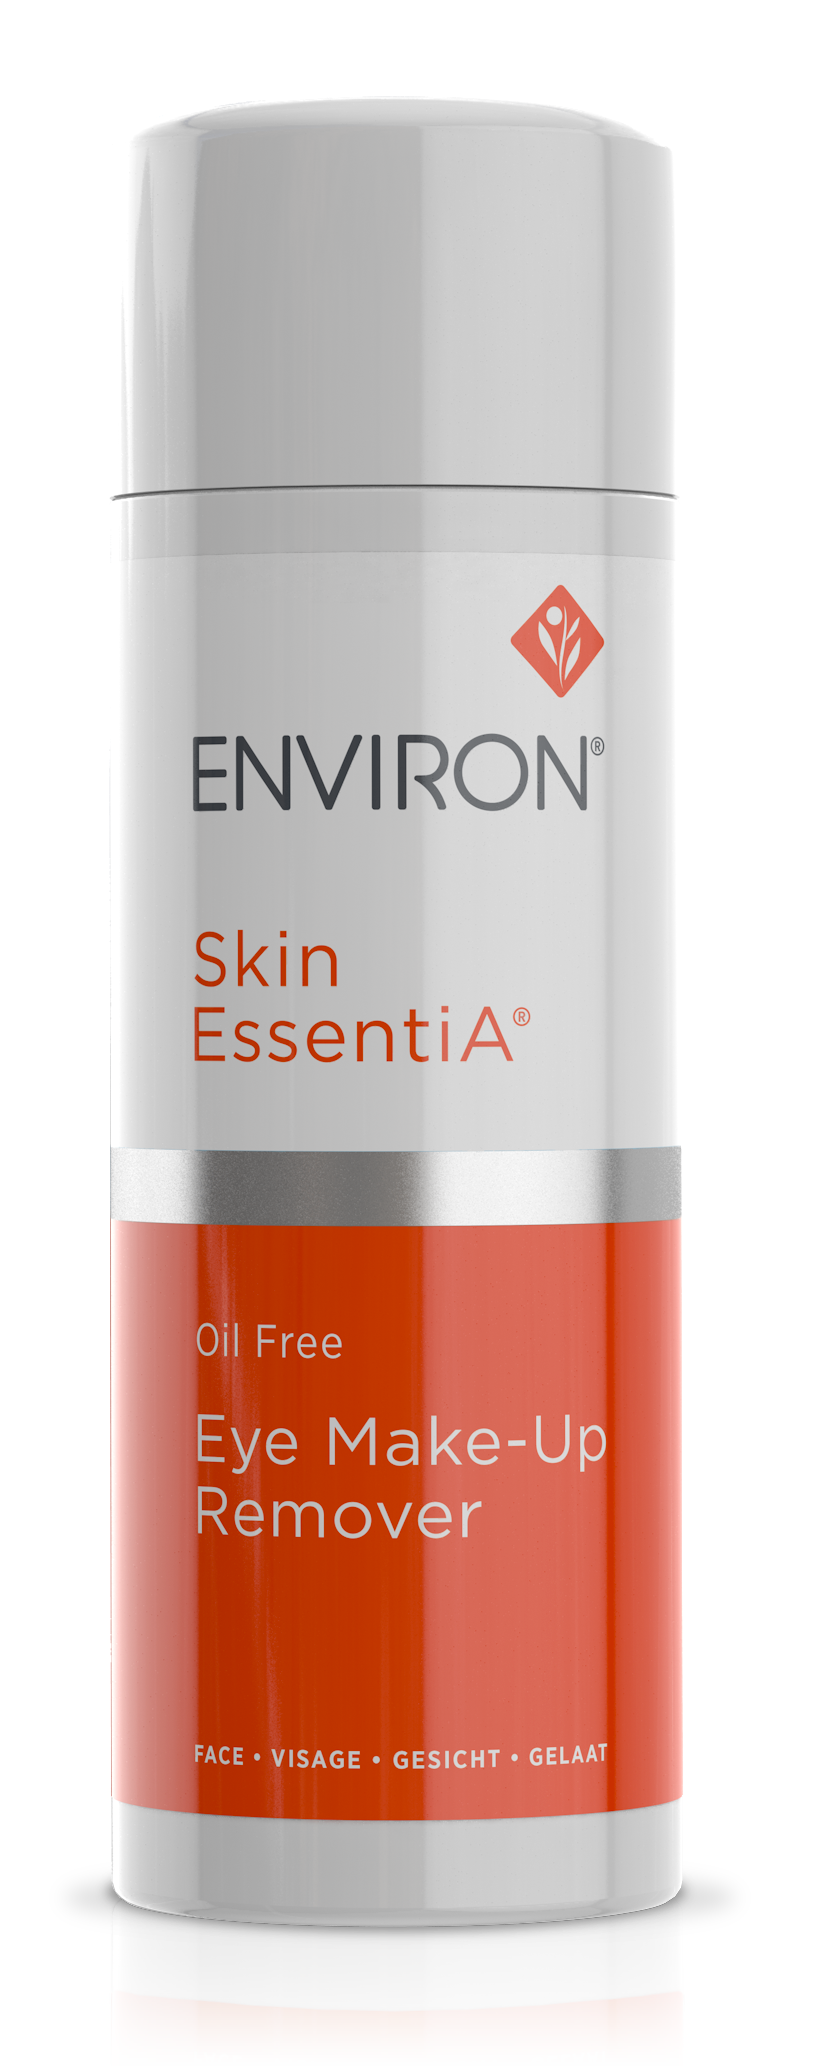 Environ Skin EssentiA Oil Free Eye Make-up Remover